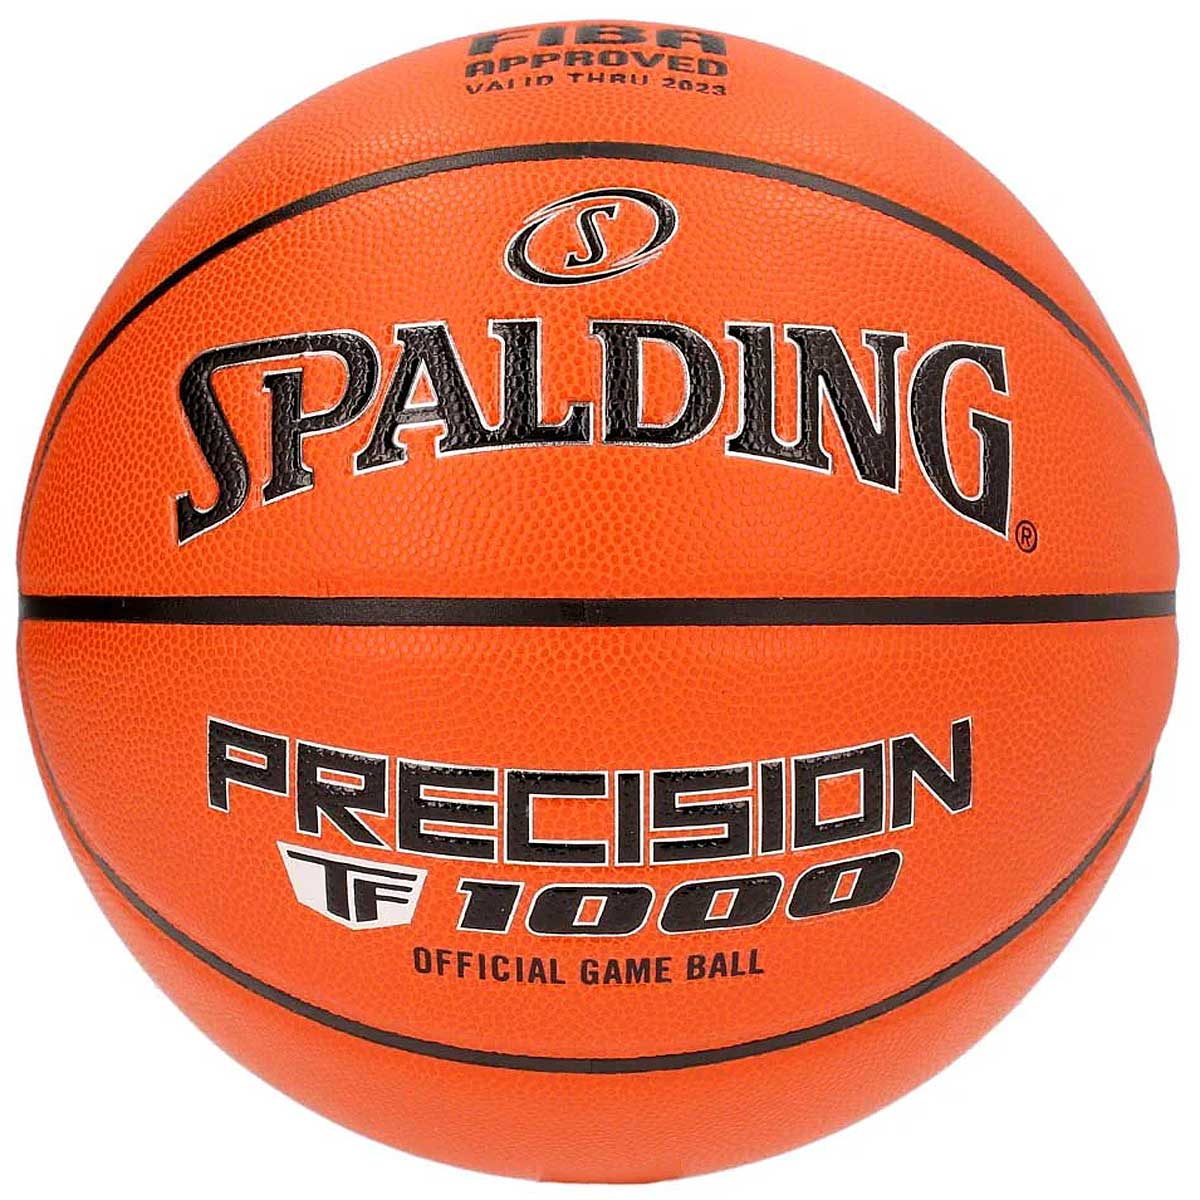 Image of Spalding Tf-1000 Precision Fiba Composite Basketball, Orange